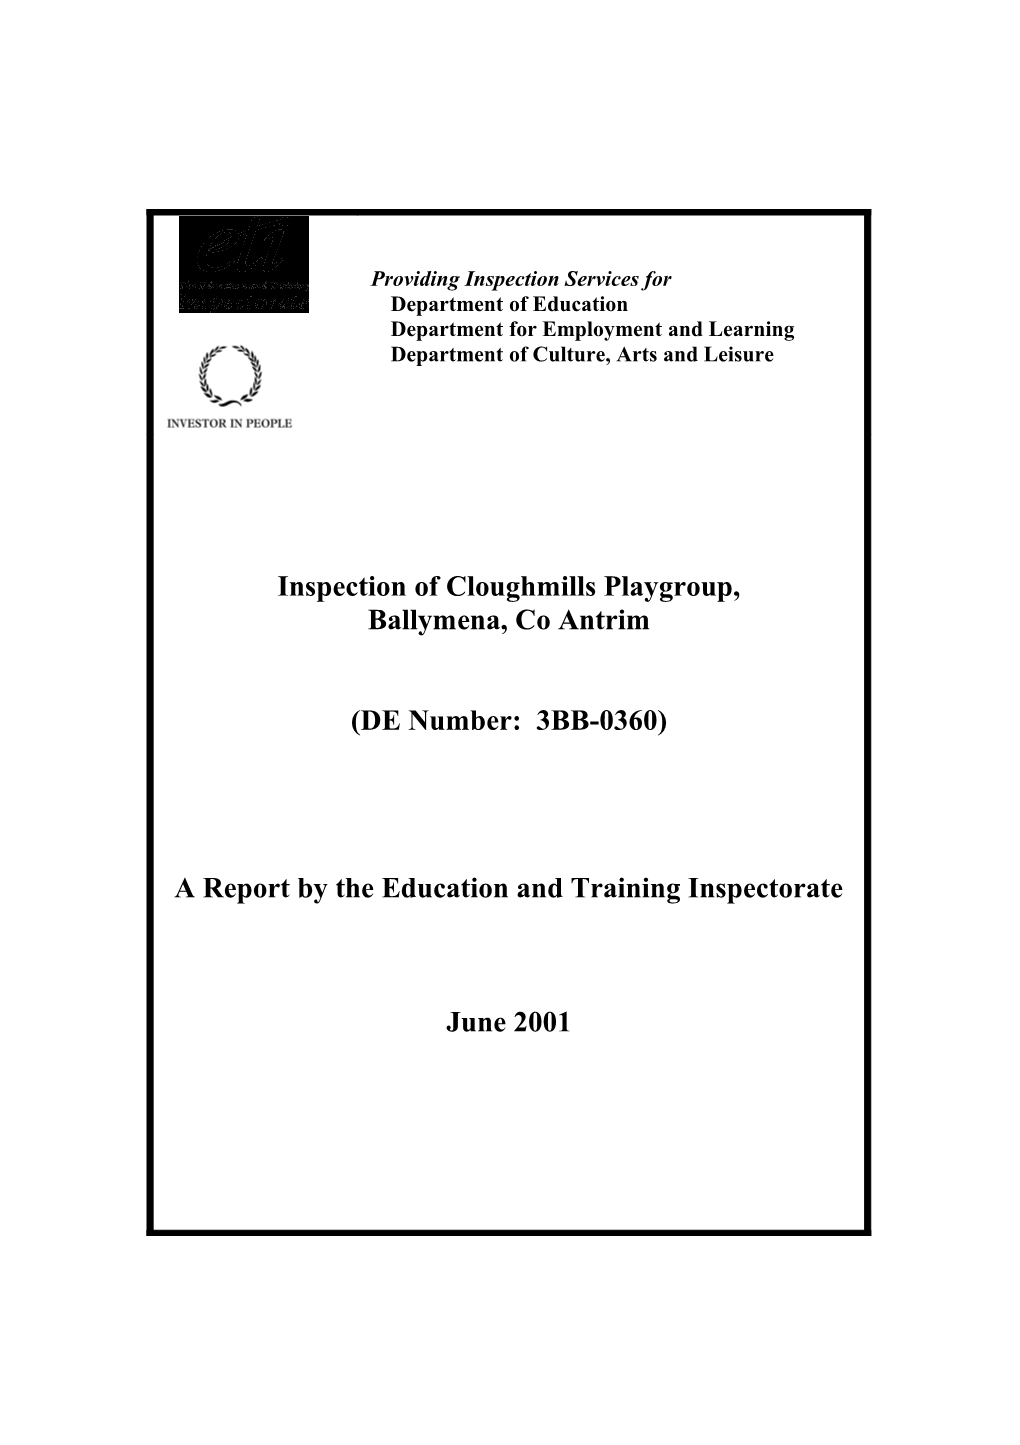 Report on the Inspection of Cloughmills PG, Main Street, Cloughmills, BT449LG11, June 2001